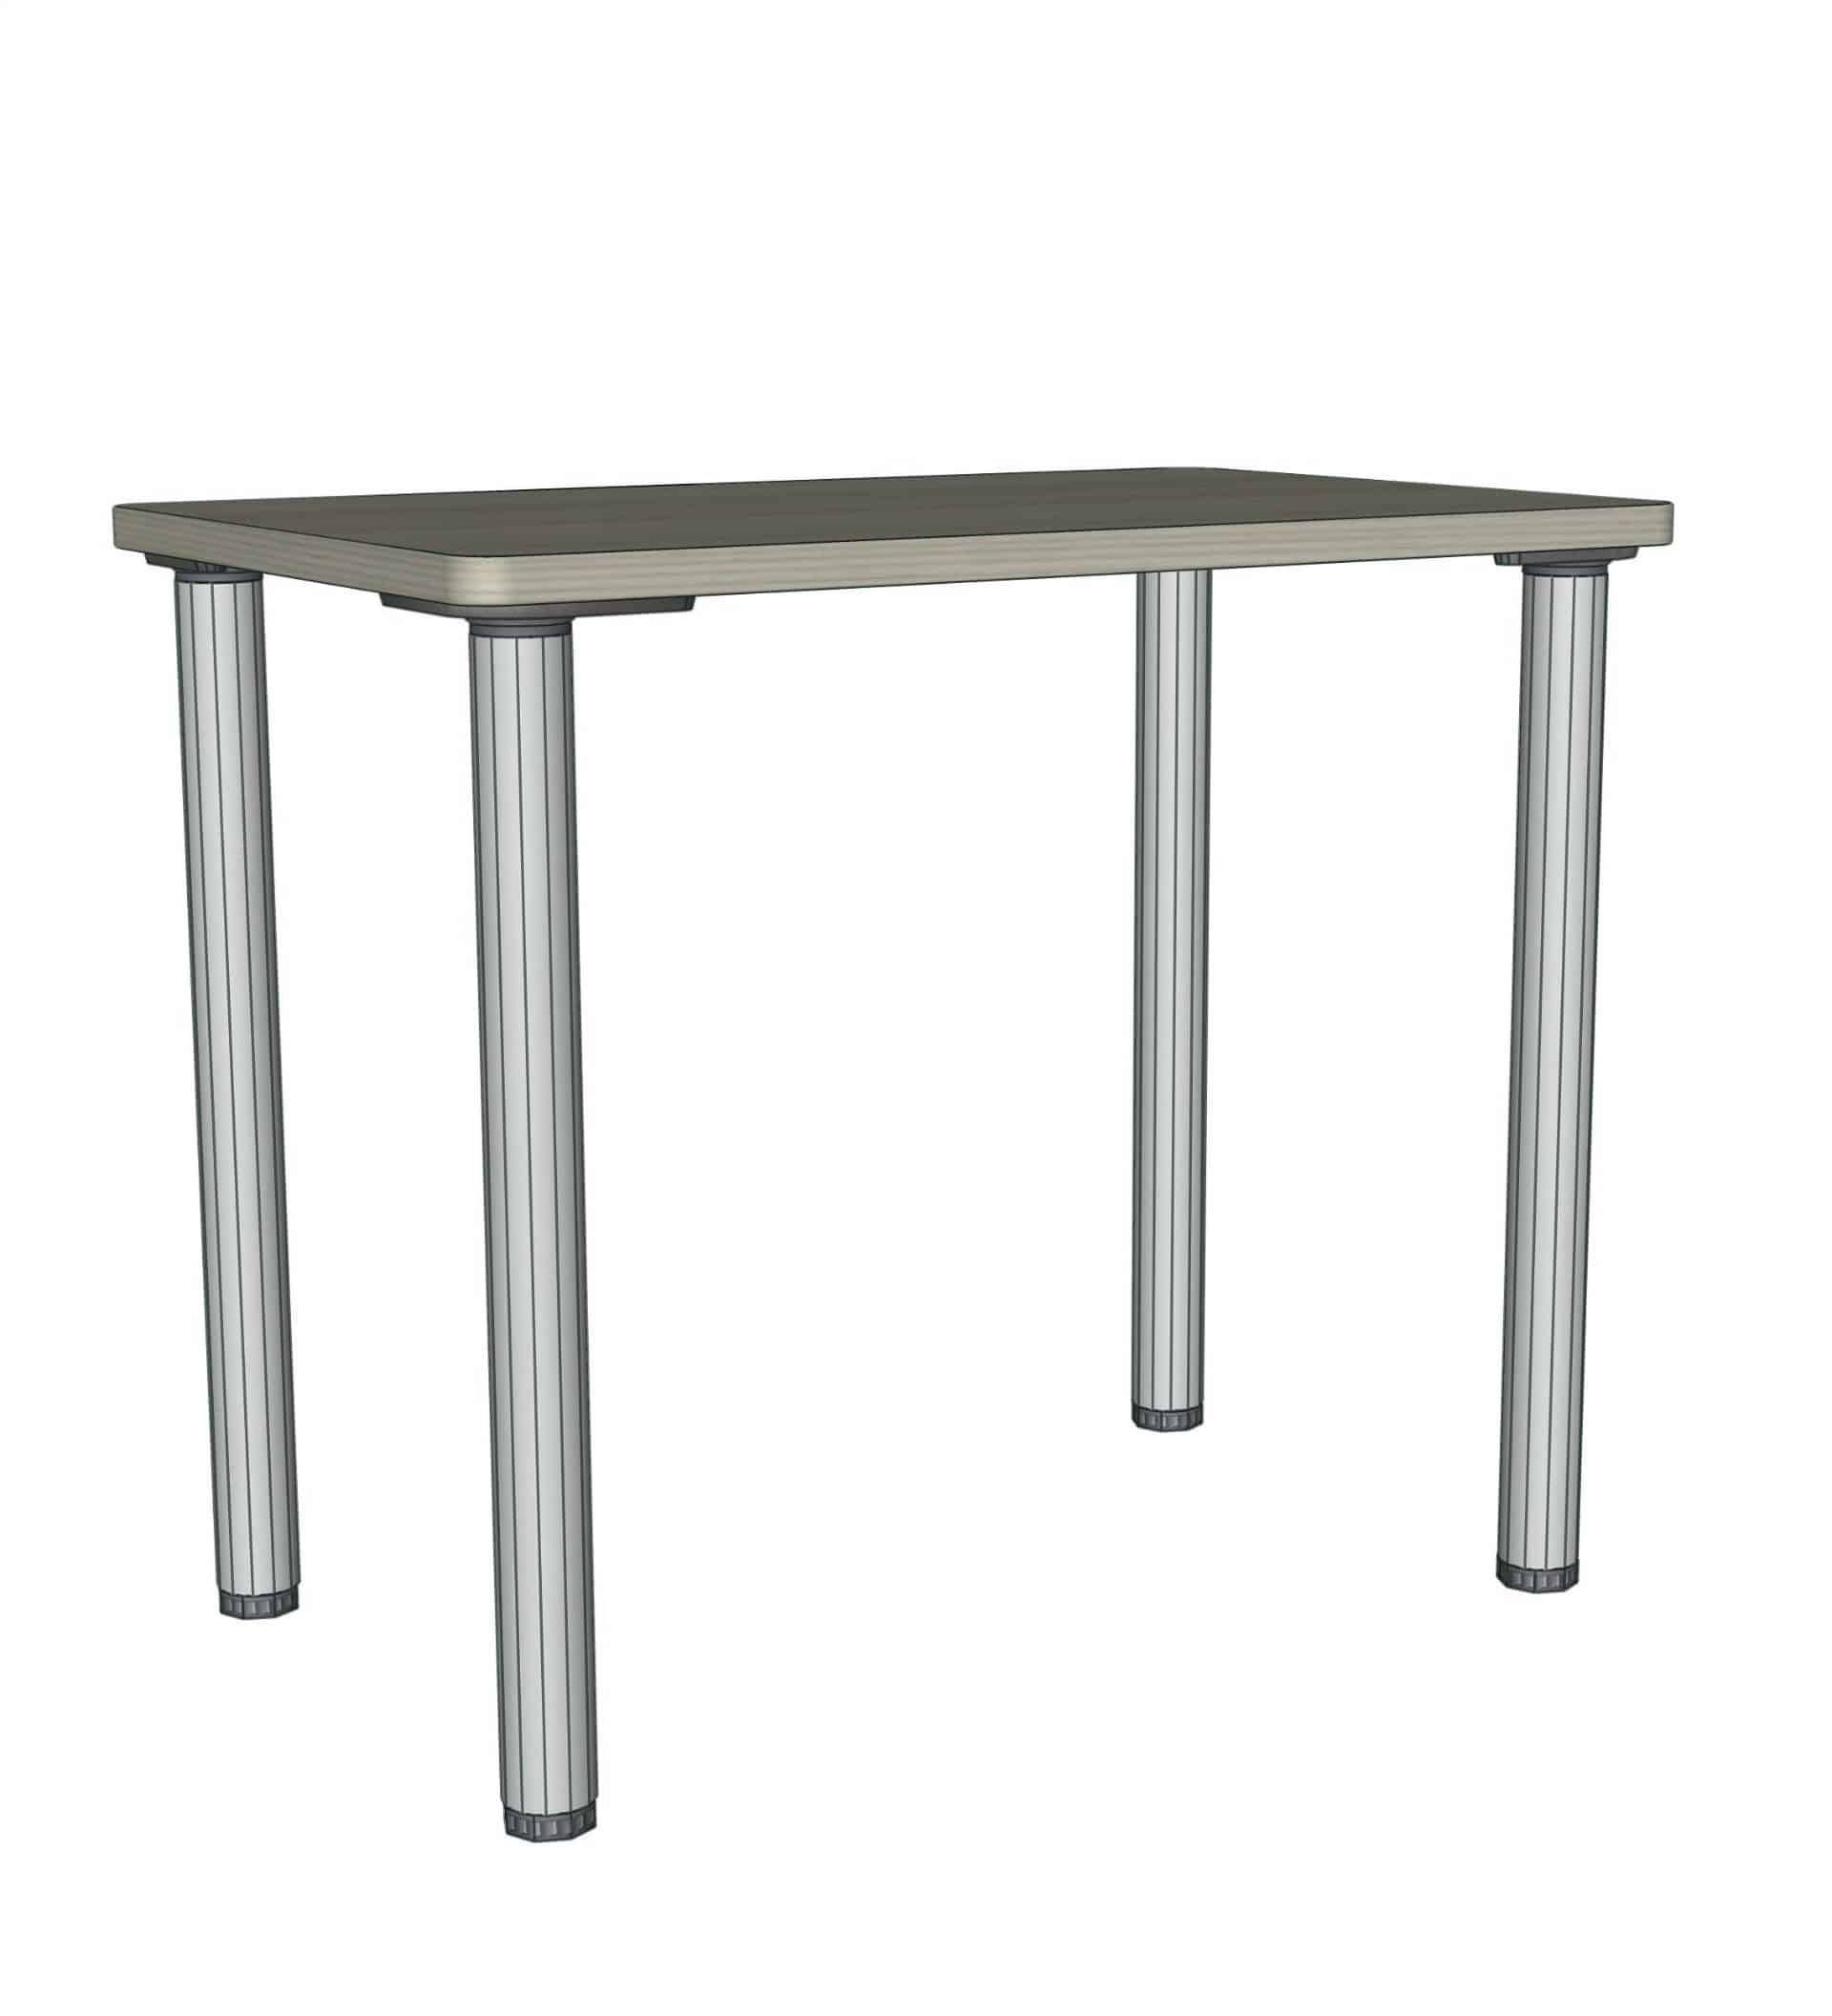 770085 - RECTANGULAR TABLE WITH ABS EDGE (4 LEGS)